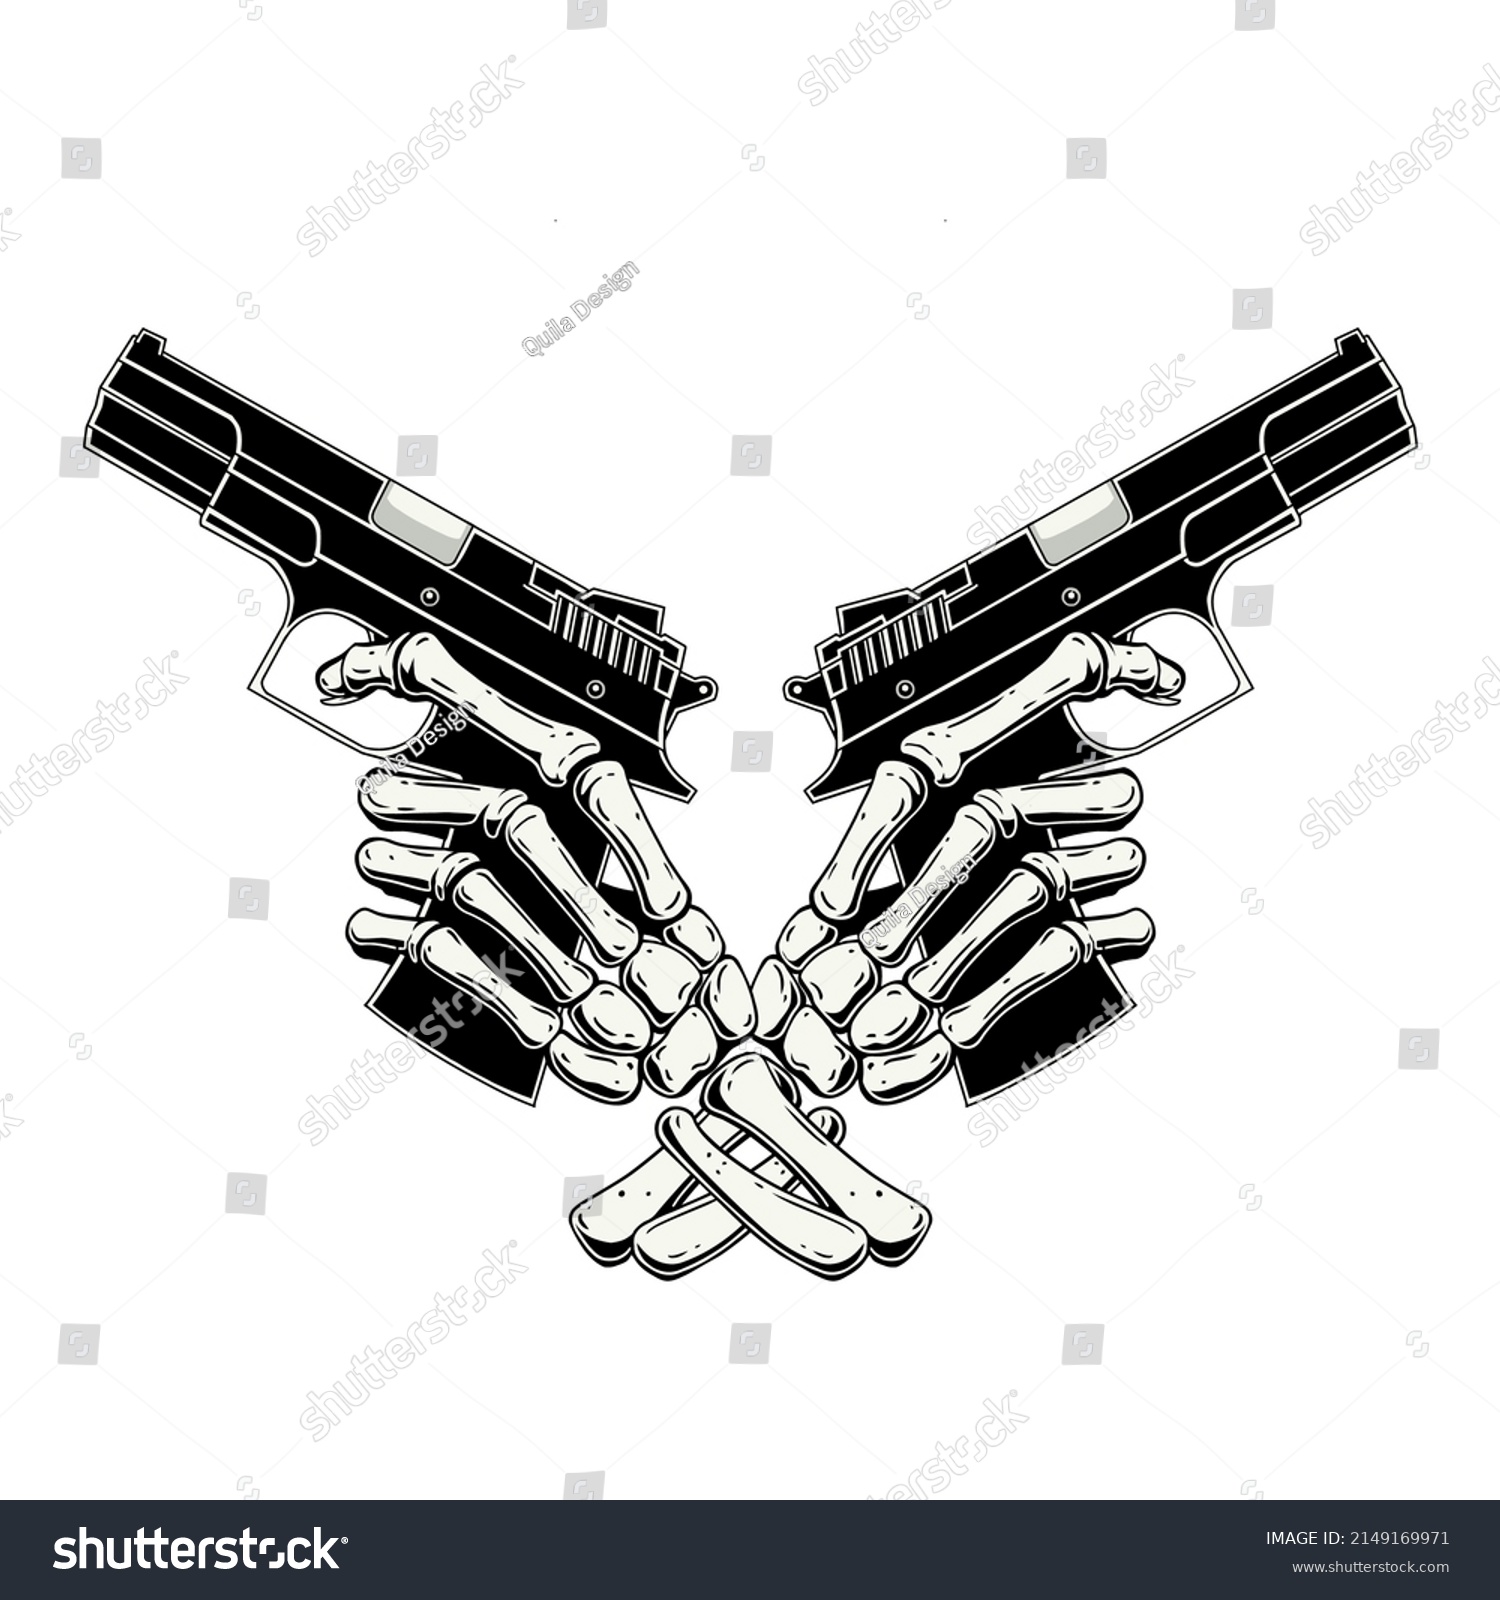 Hand Holding Gun Shoting Vector Illustration Stock Vector Royalty Free Shutterstock